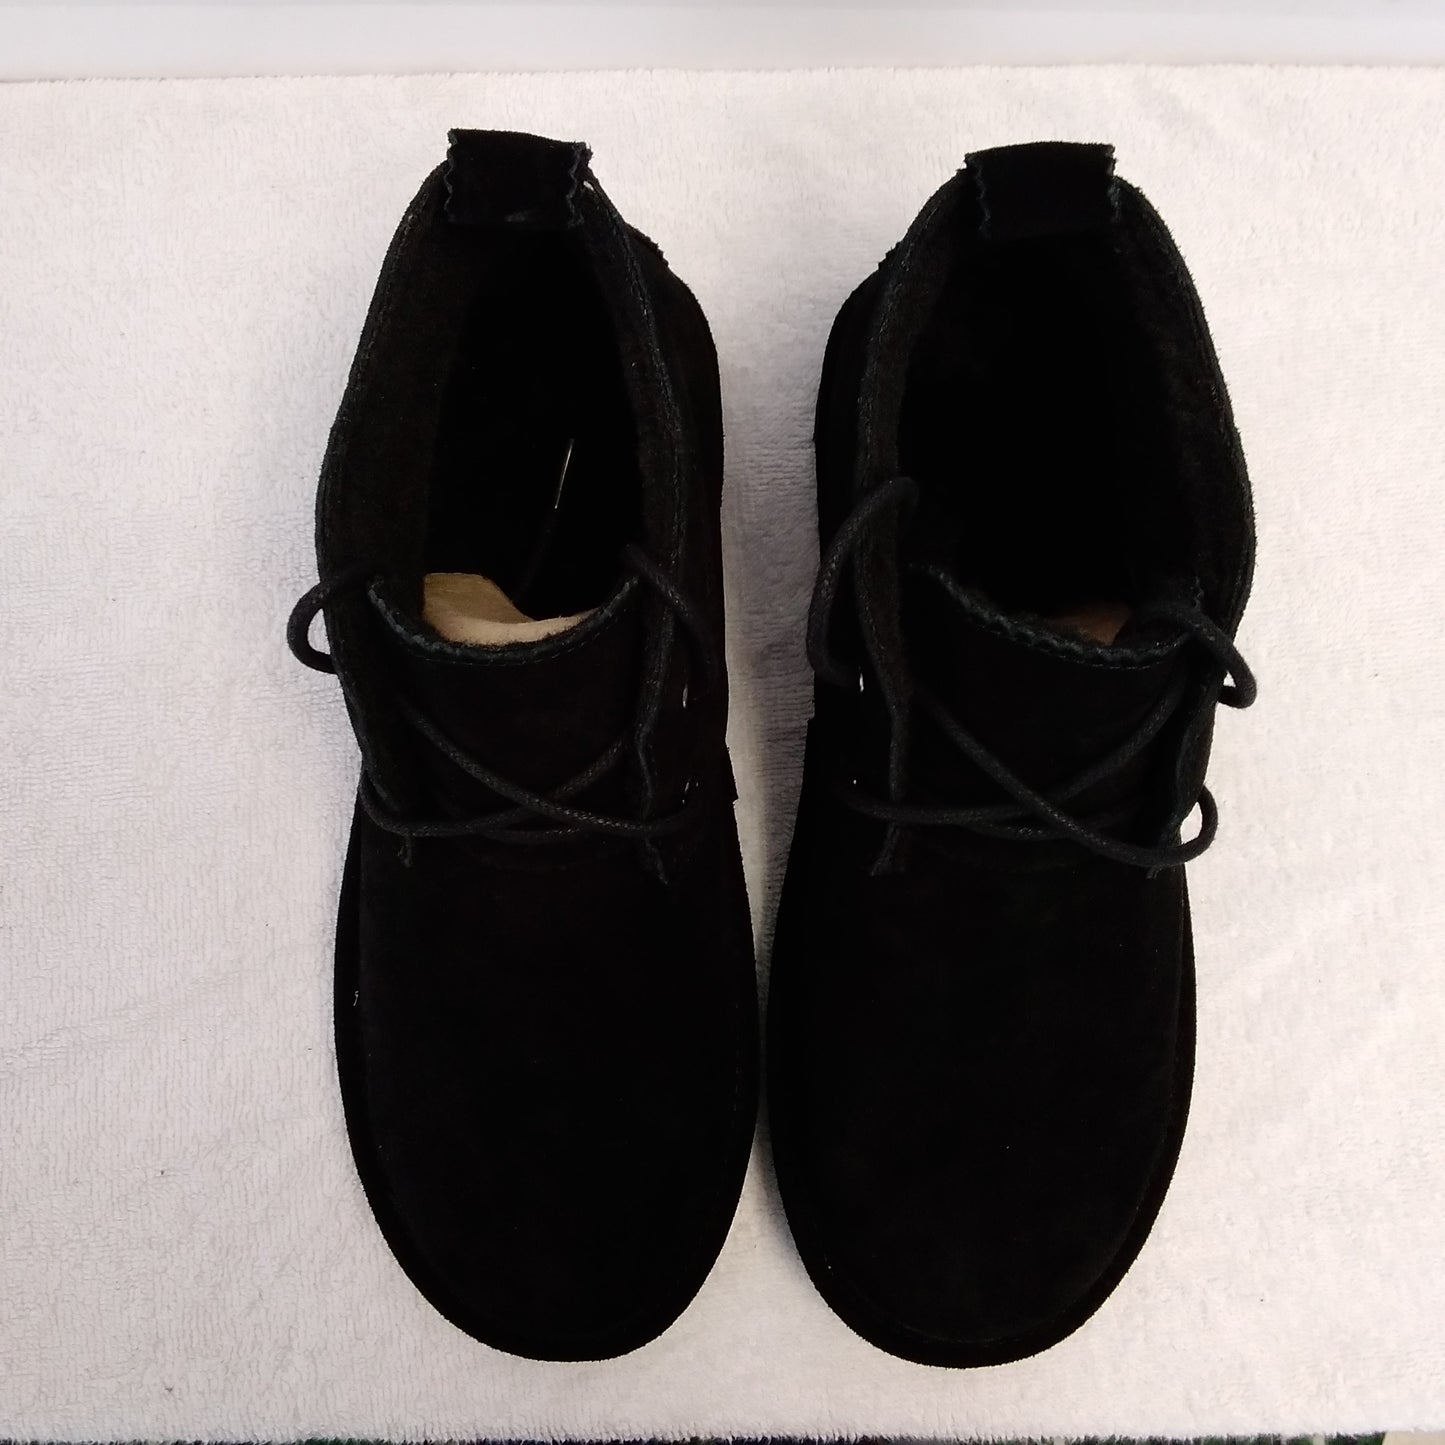 NIB - BEARPAW Women's Black Skye Chukka Boots - Size 10